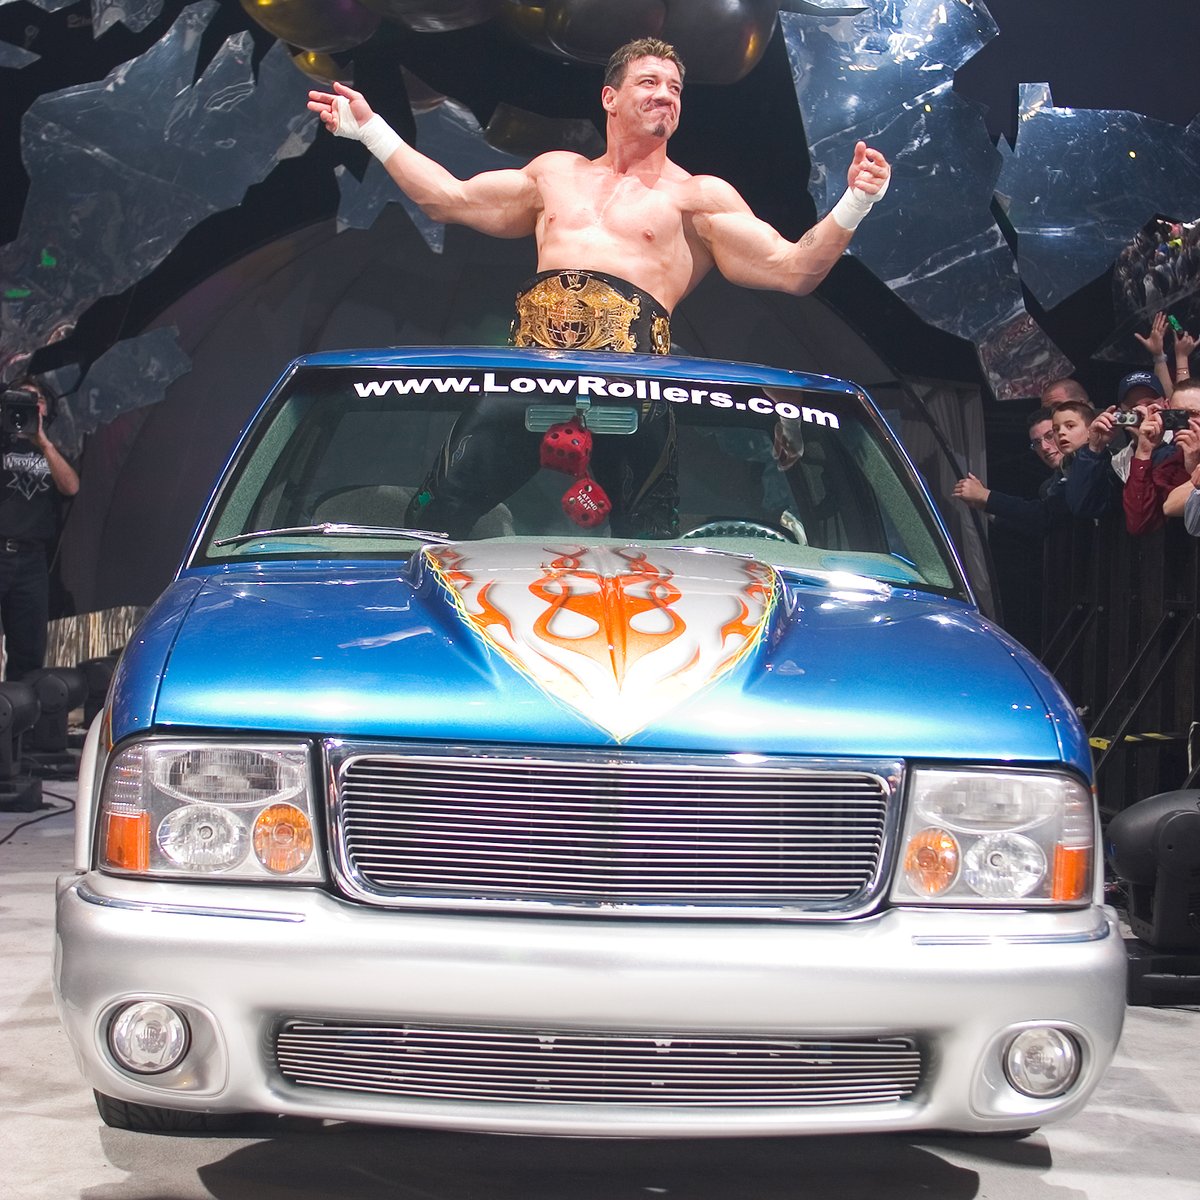 Remembering WWE Hall of Famer Eddie Guerrero on his birthday. ❤️ VIVA LA RAZA!